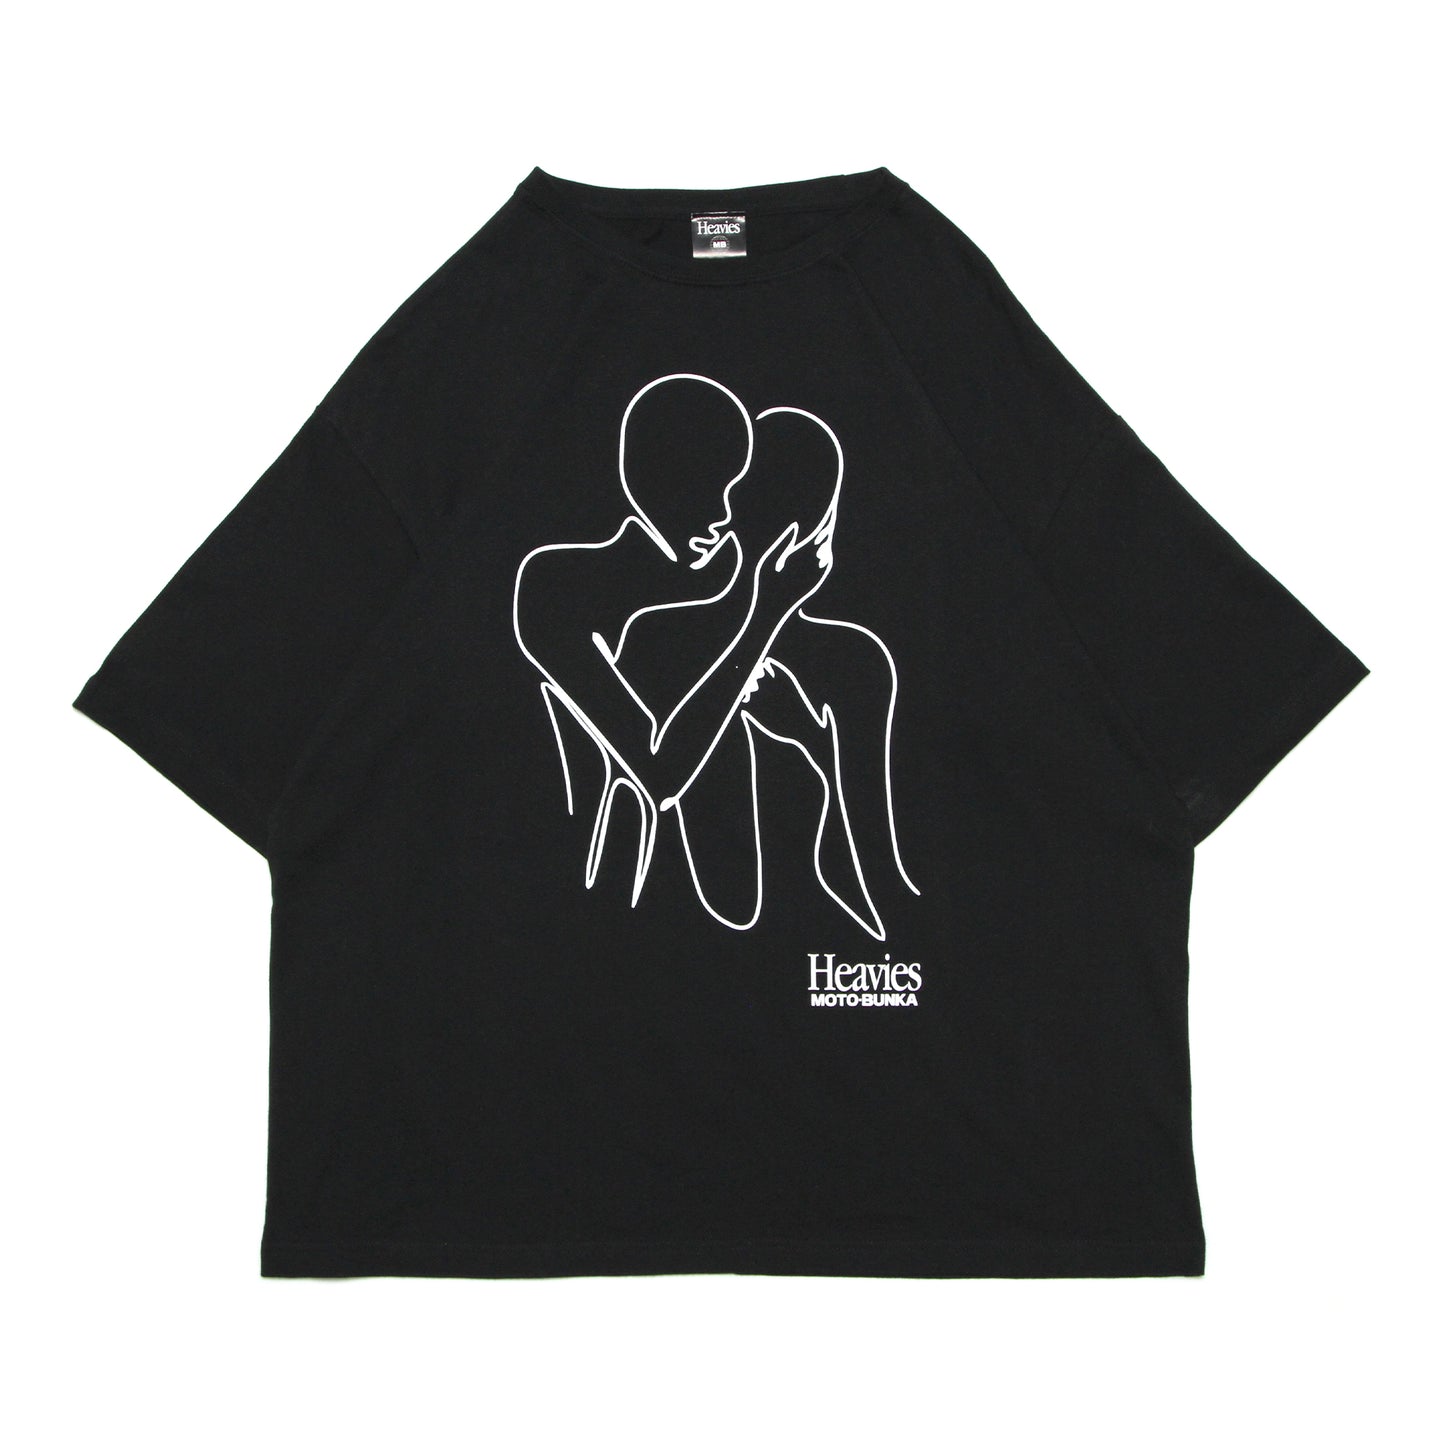 MOTO-BUNKA X HEAVIES - Embrace T-Shirt/Black